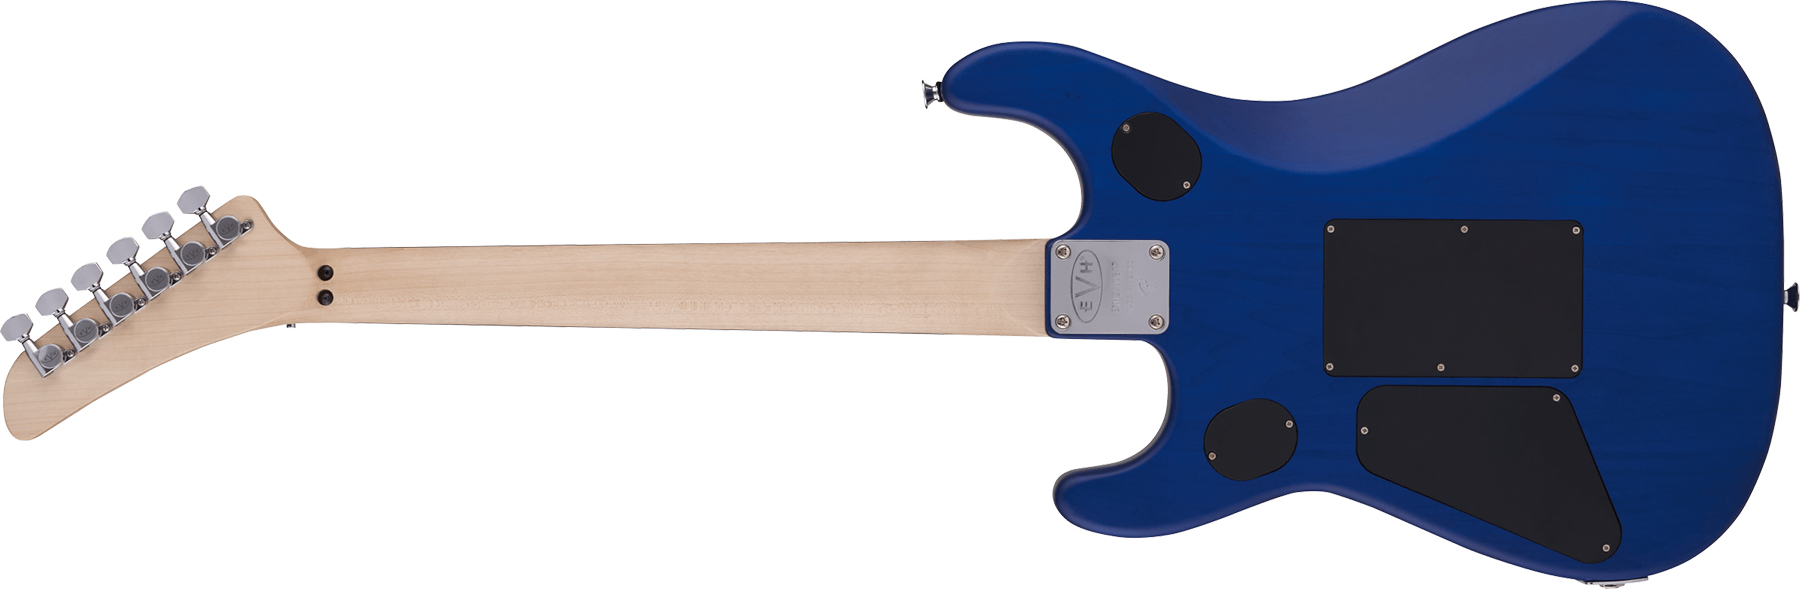 Evh 5150 Deluxe Poplar Burl Mex 2h Fr Eb - Aqua Burst - Str shape electric guitar - Variation 1